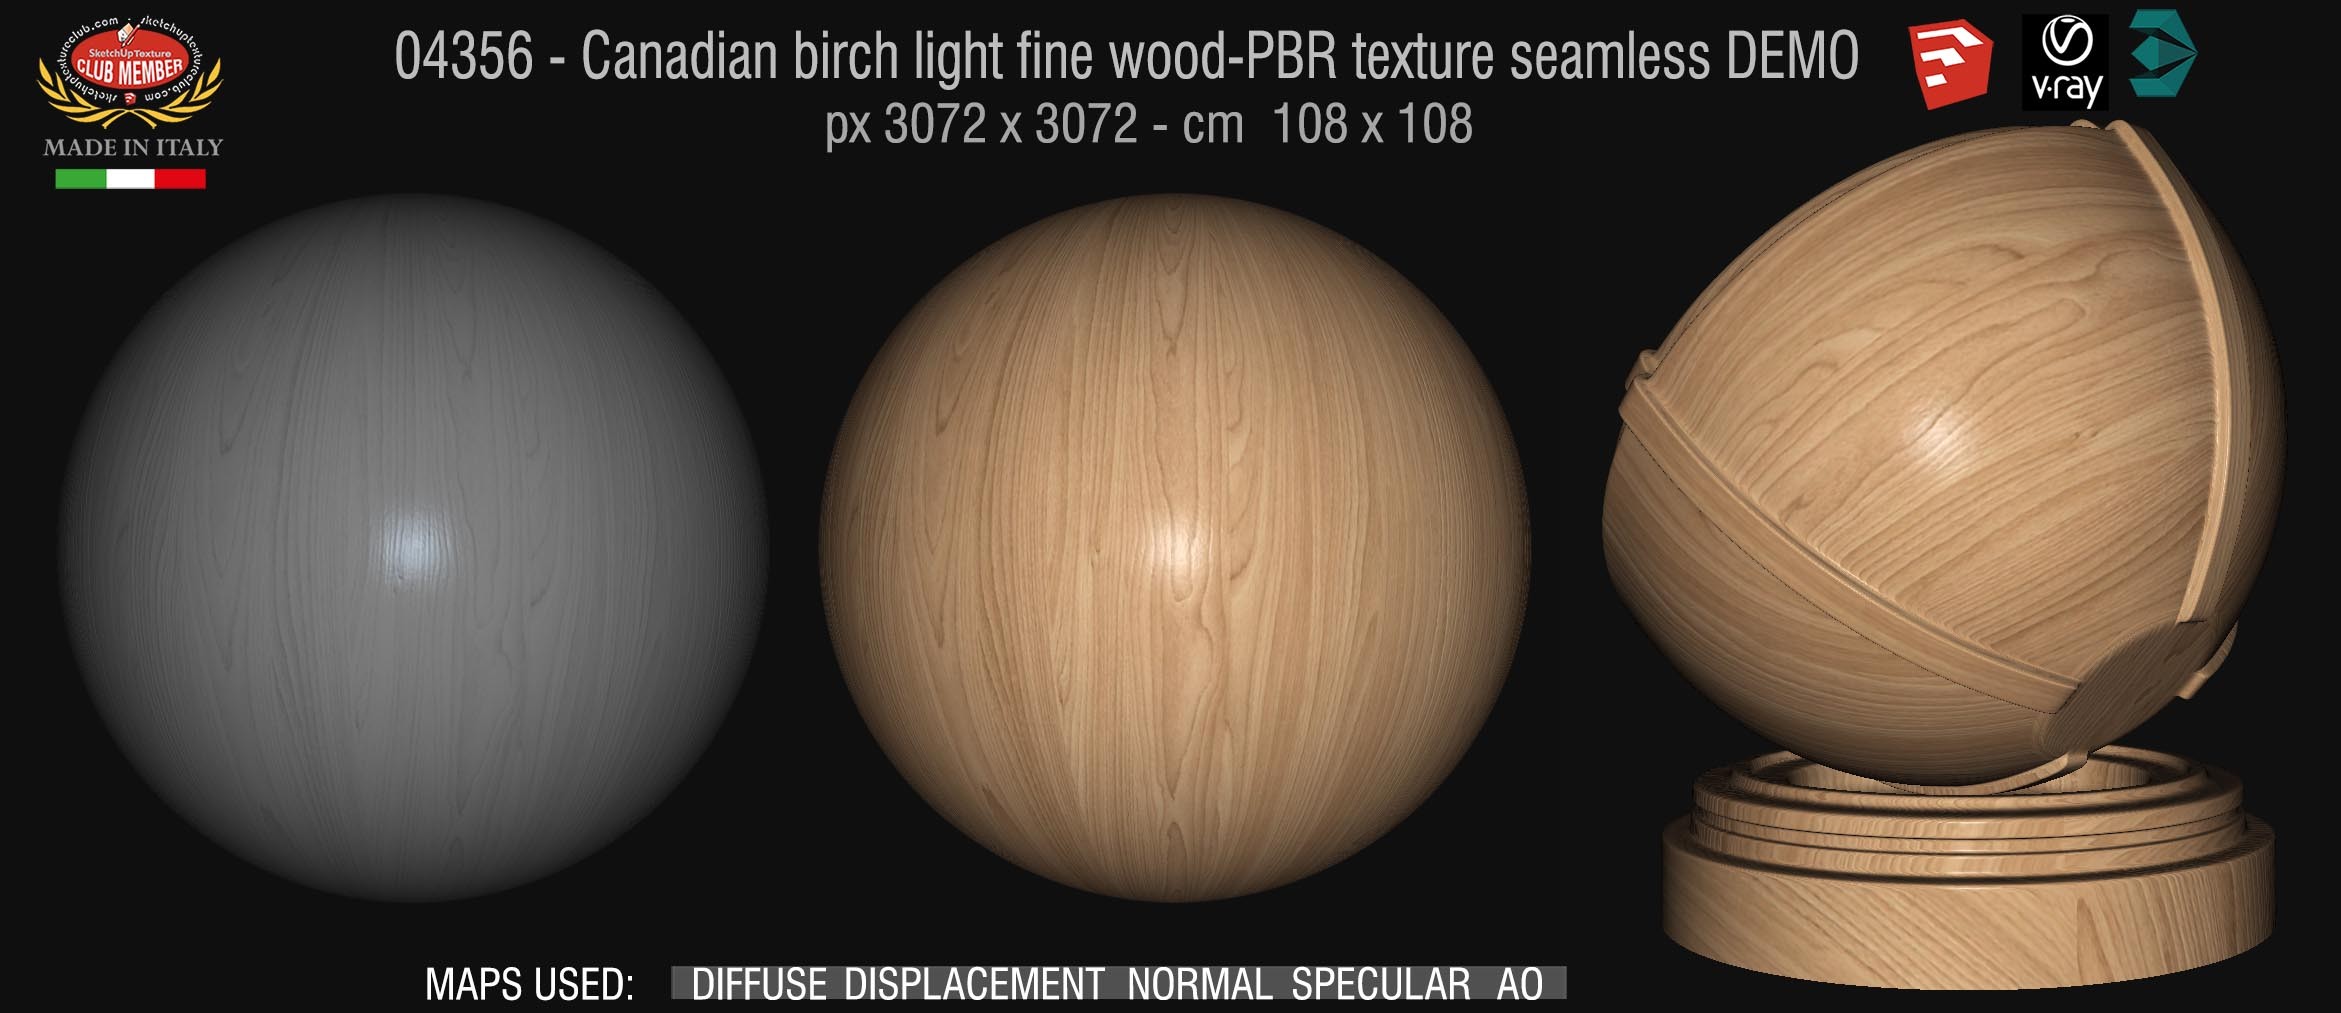 04356 Canadian birch light fine wood-PBR texture seamless DEMO